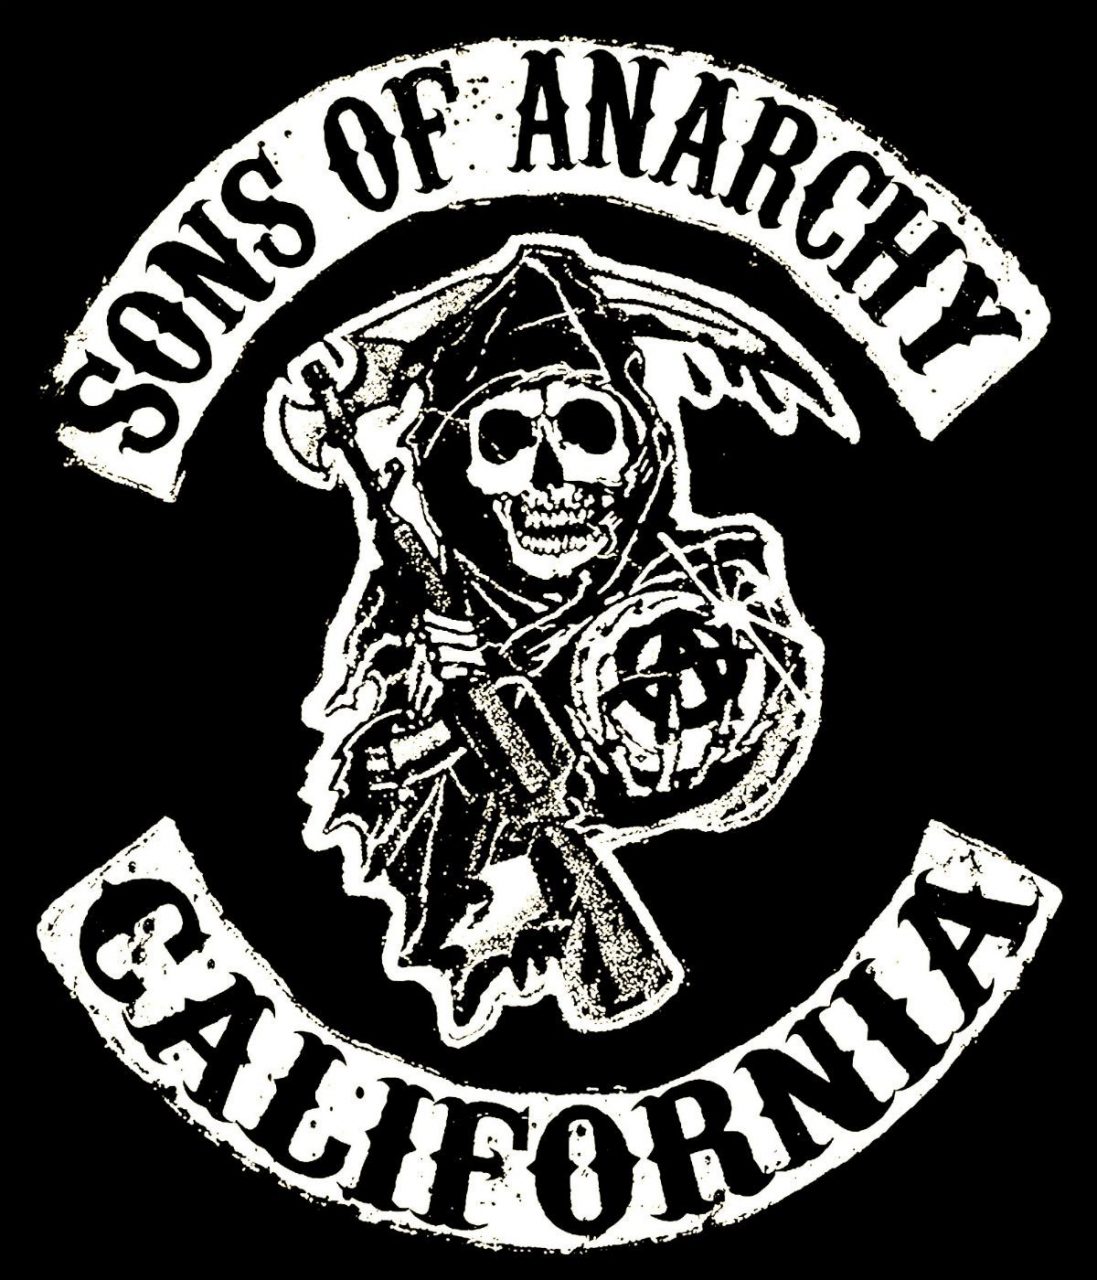 Hijos de la anarquia logo